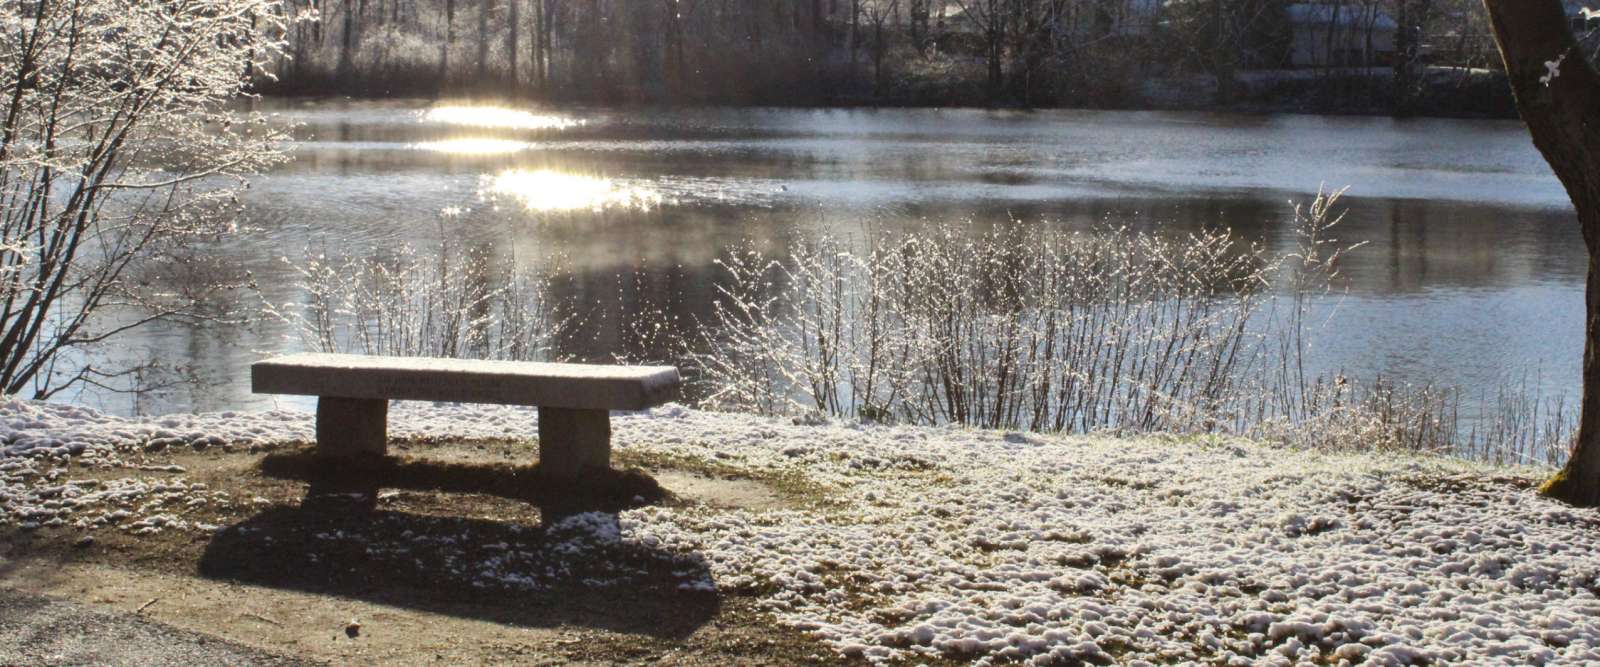 Bench overlooking pond